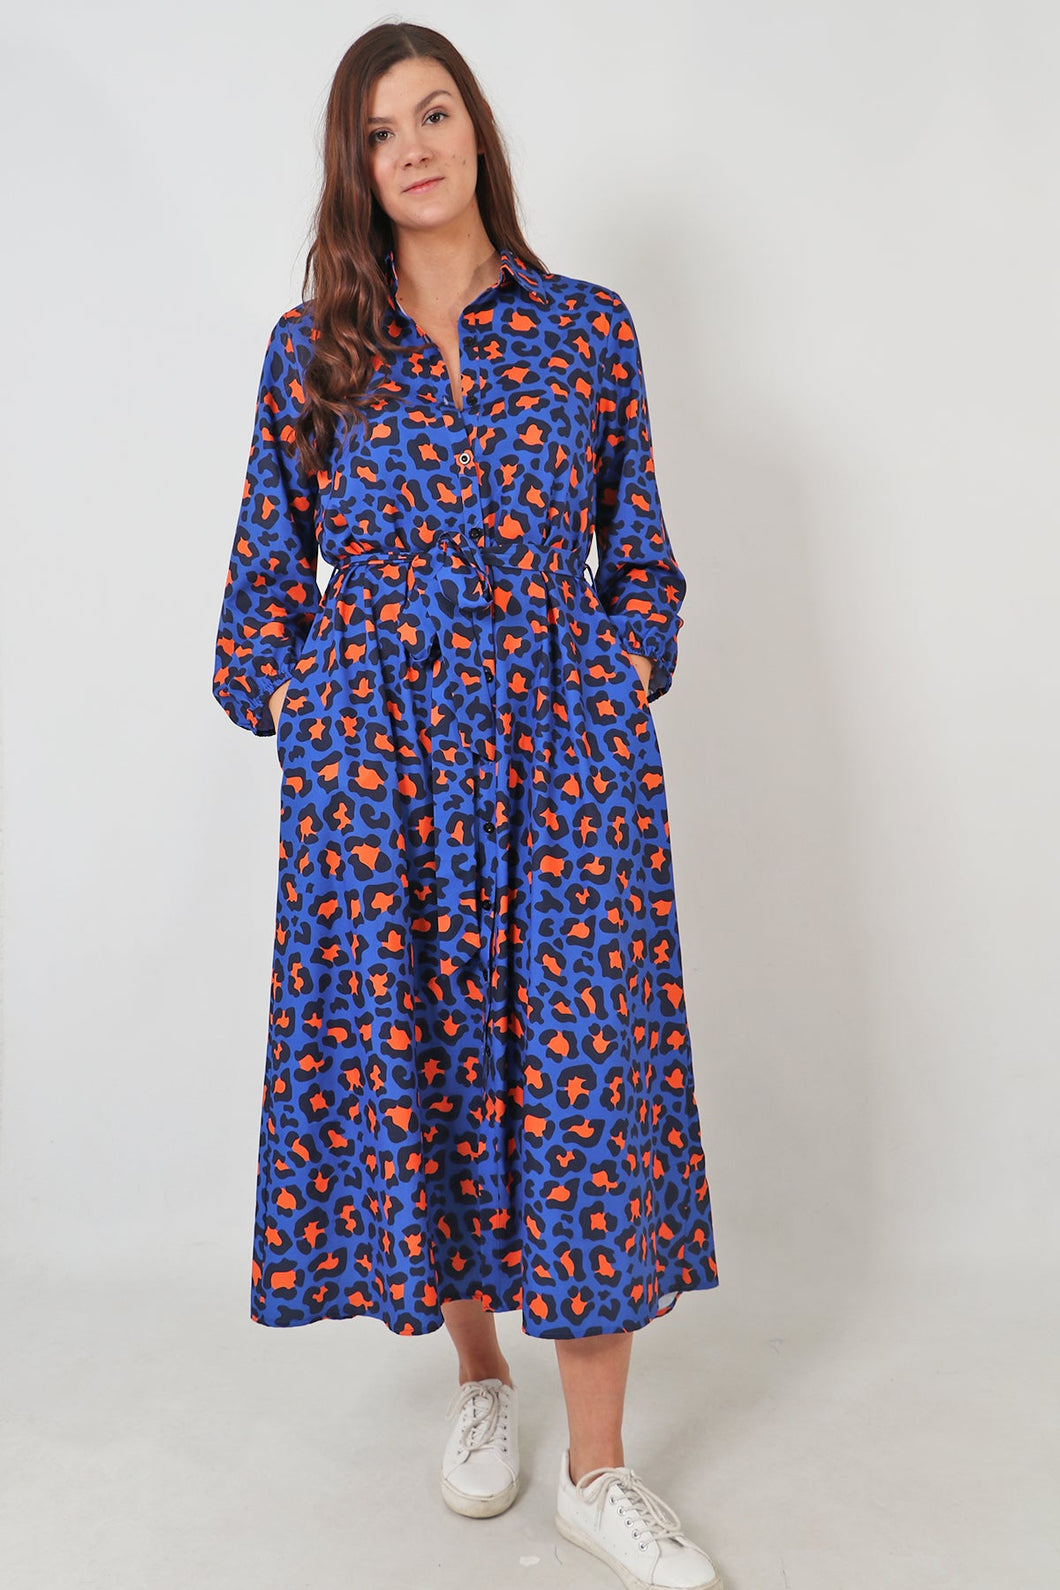 Leopard Print Maxi Shirt Dress - Blue / Orange